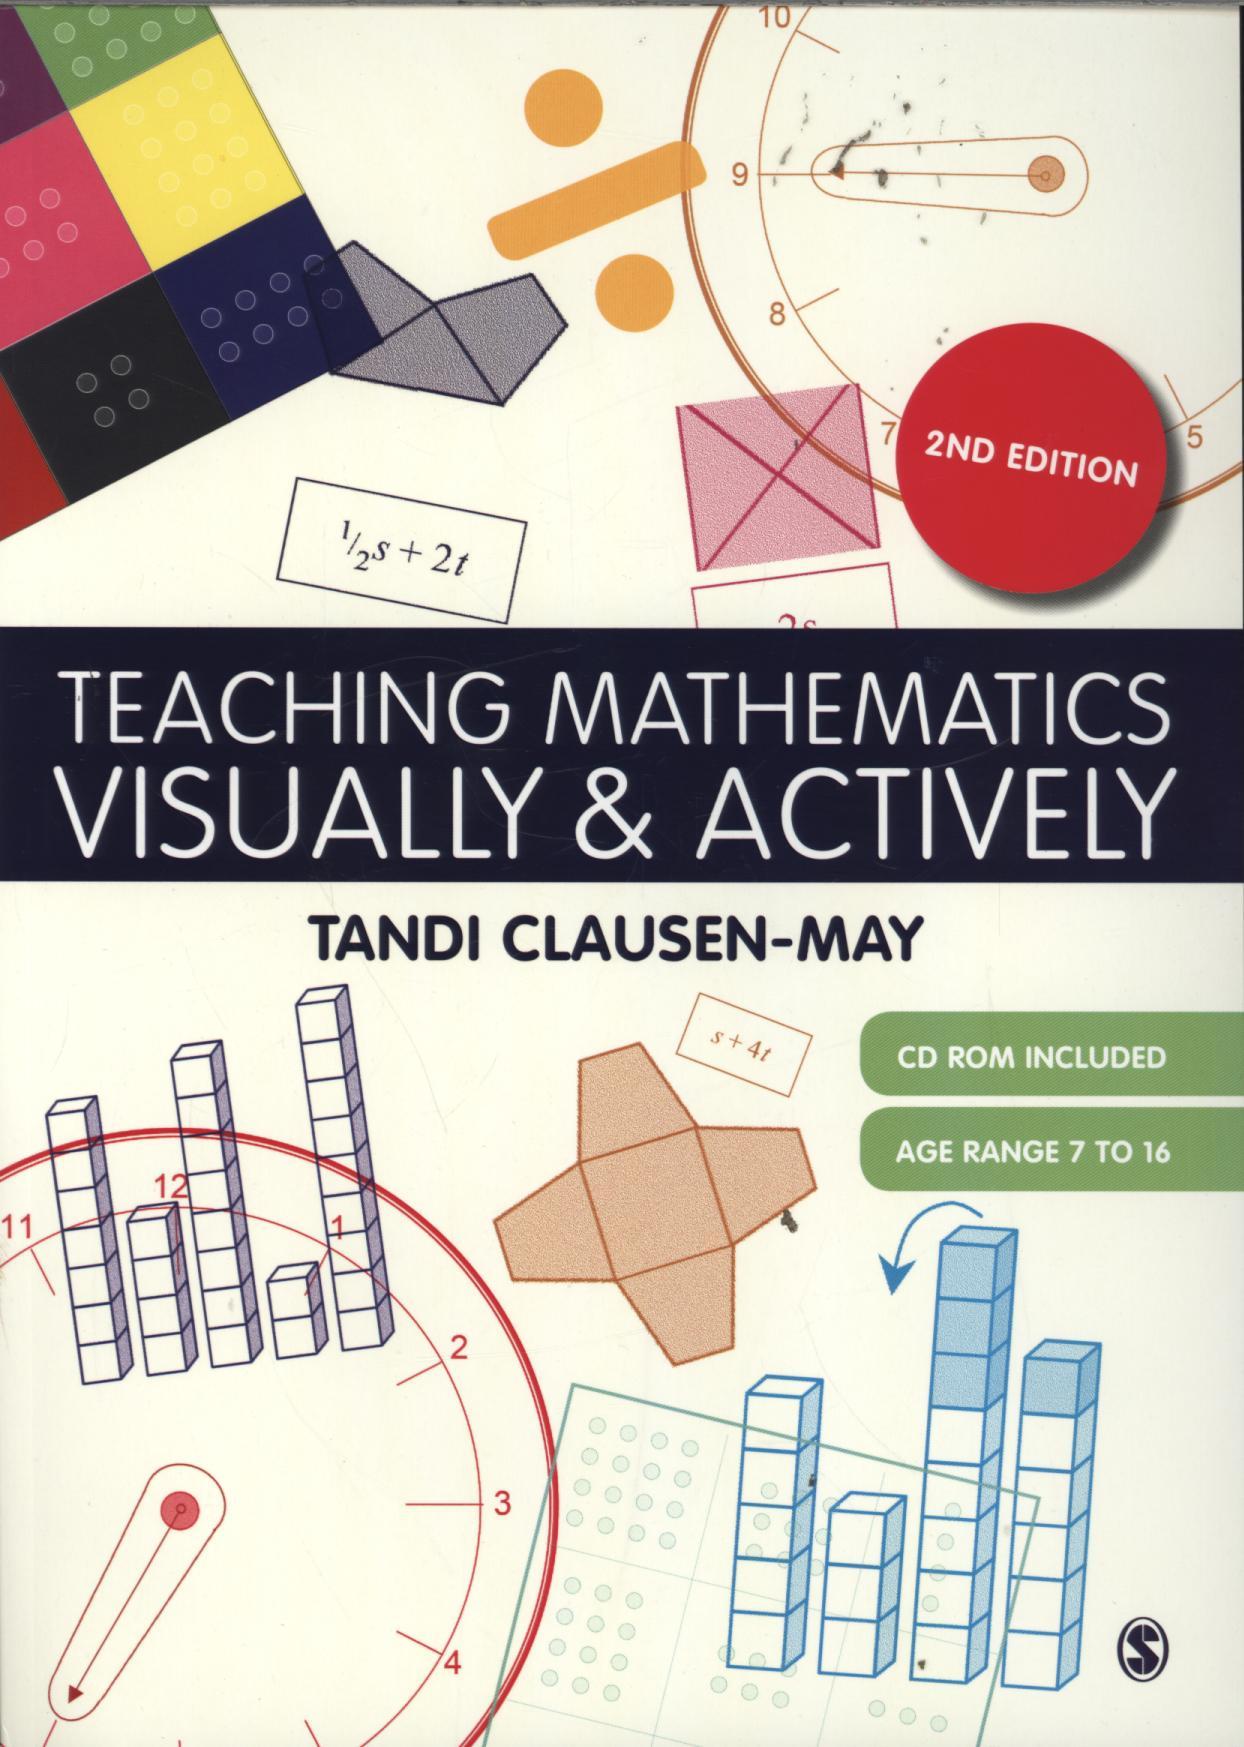 Teaching Mathematics Visually and Actively - Tandi Clausen-May